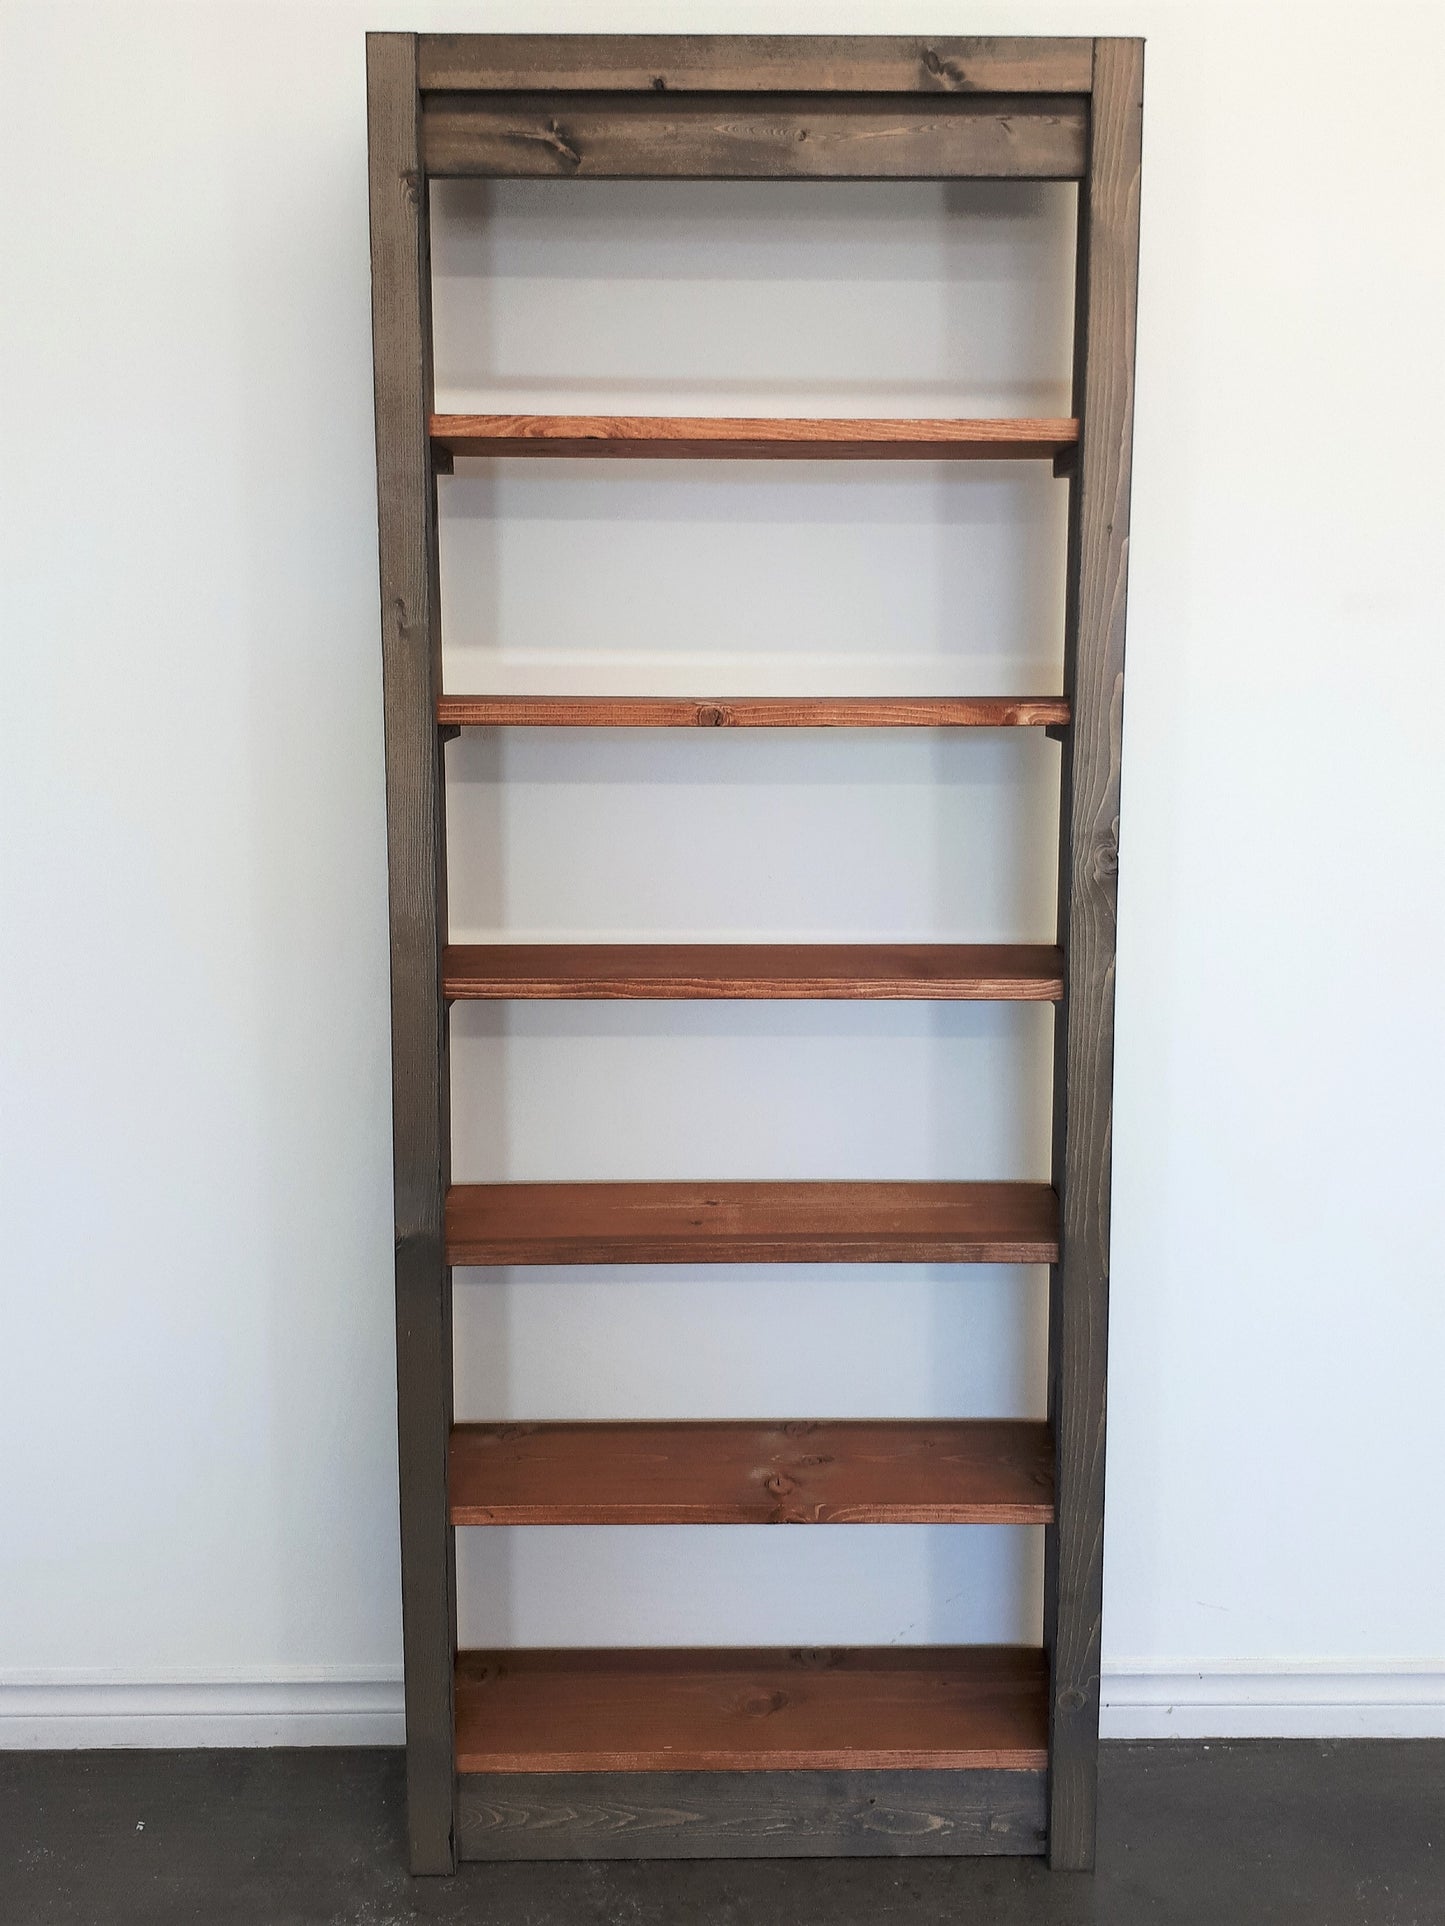 Solid Wood Bookshelf - Set of Two